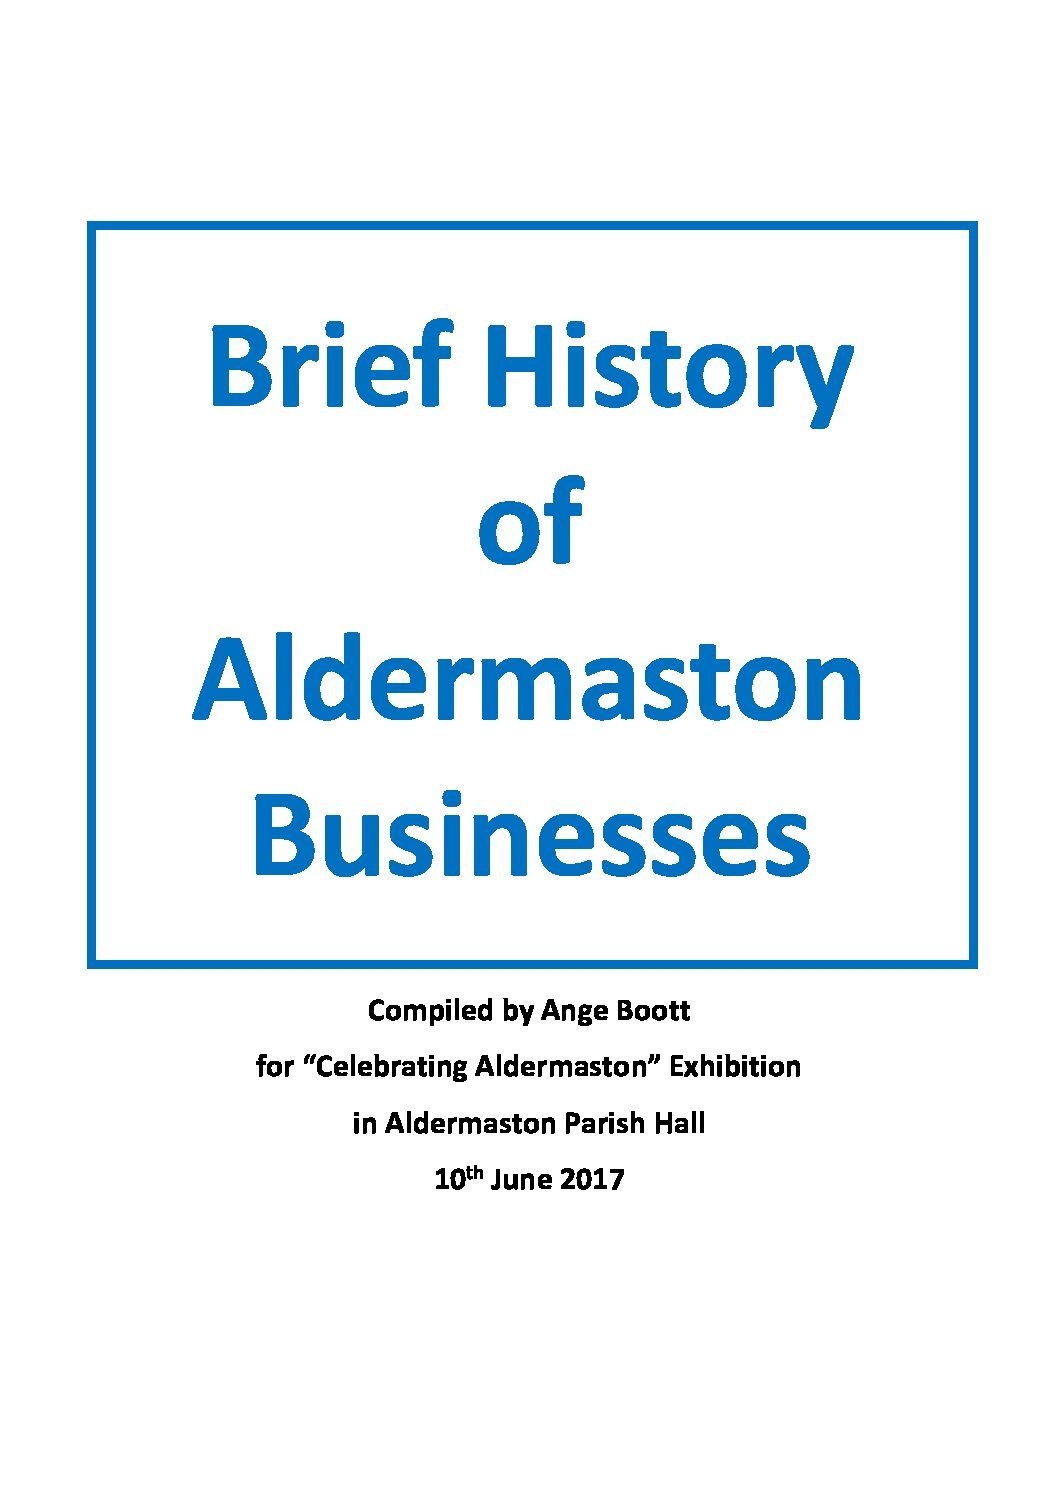 A brief history of Aldermaston Businesses